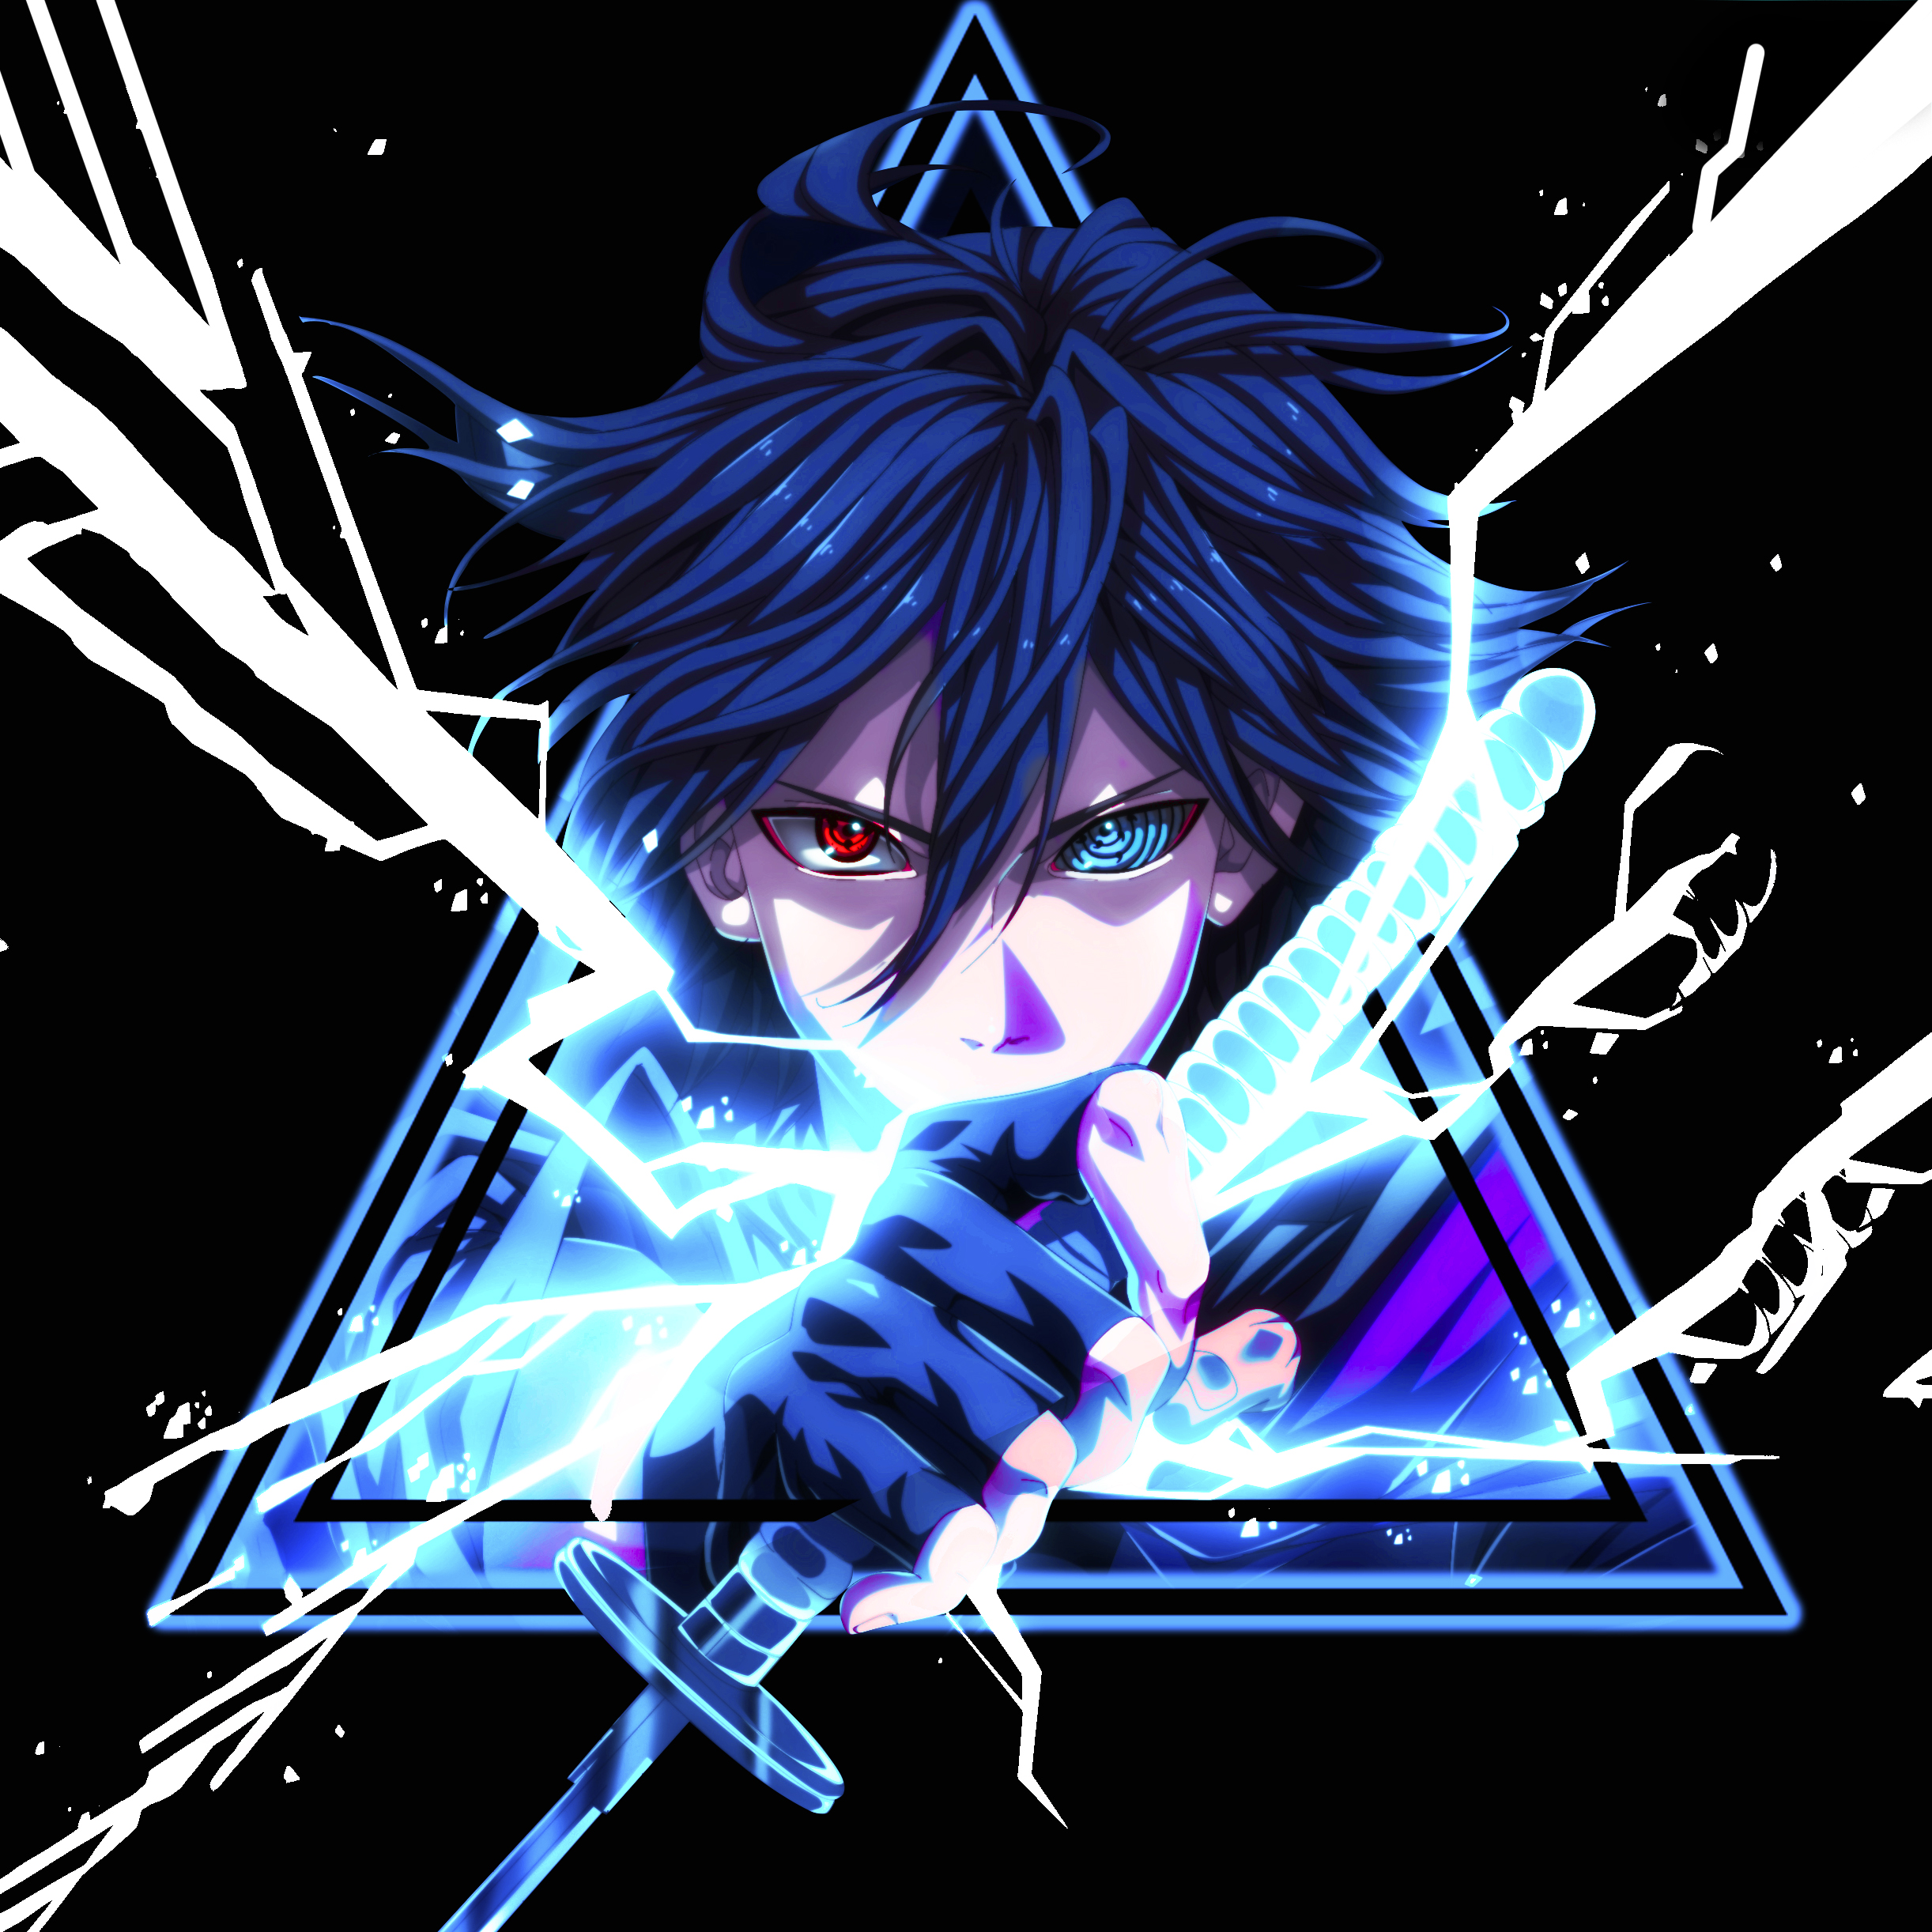 Anime 2444x2444 Uchiha clan Uchiha Sasuke digital art anime heterochromia looking at viewer blue hair sword triangle simple background black background